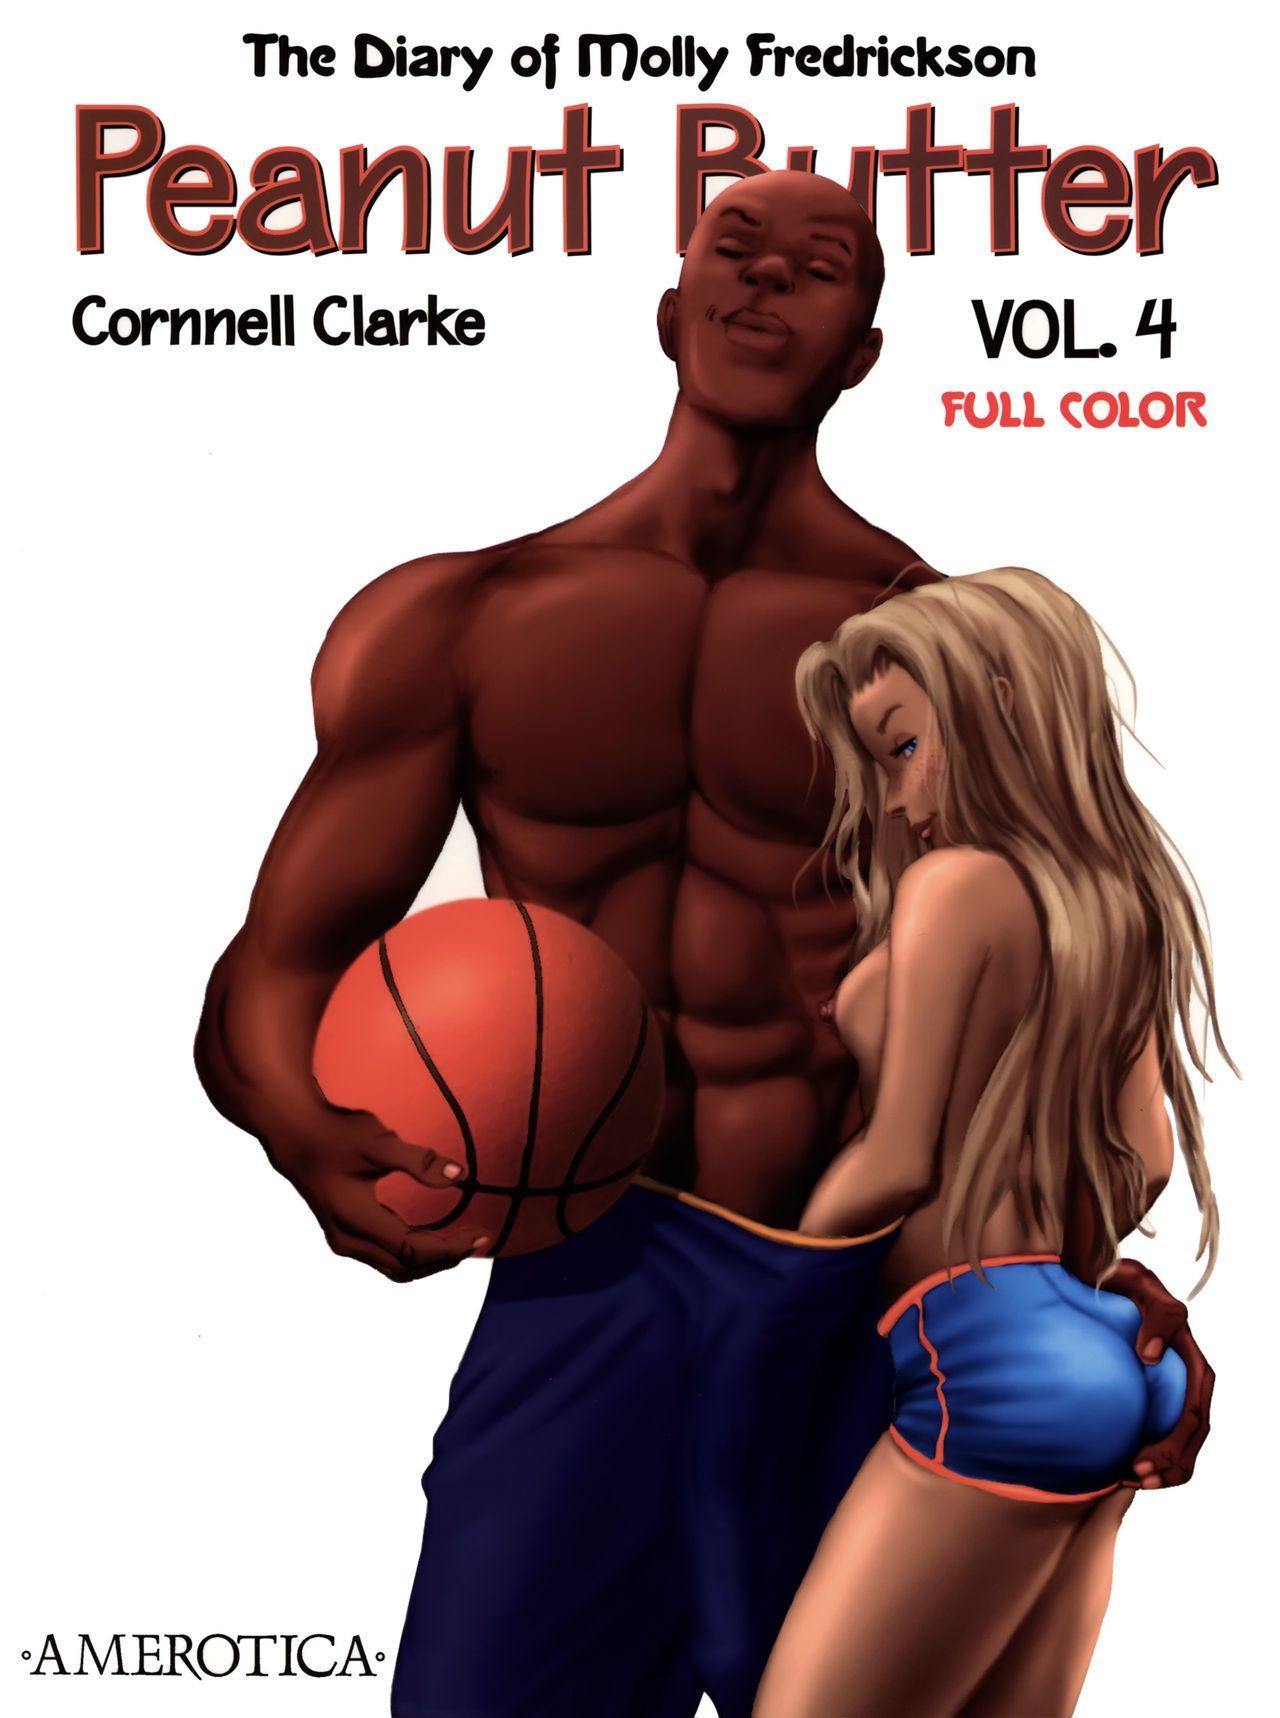 Cornnell Clarke Peanut Butter - Volume #4 Colored